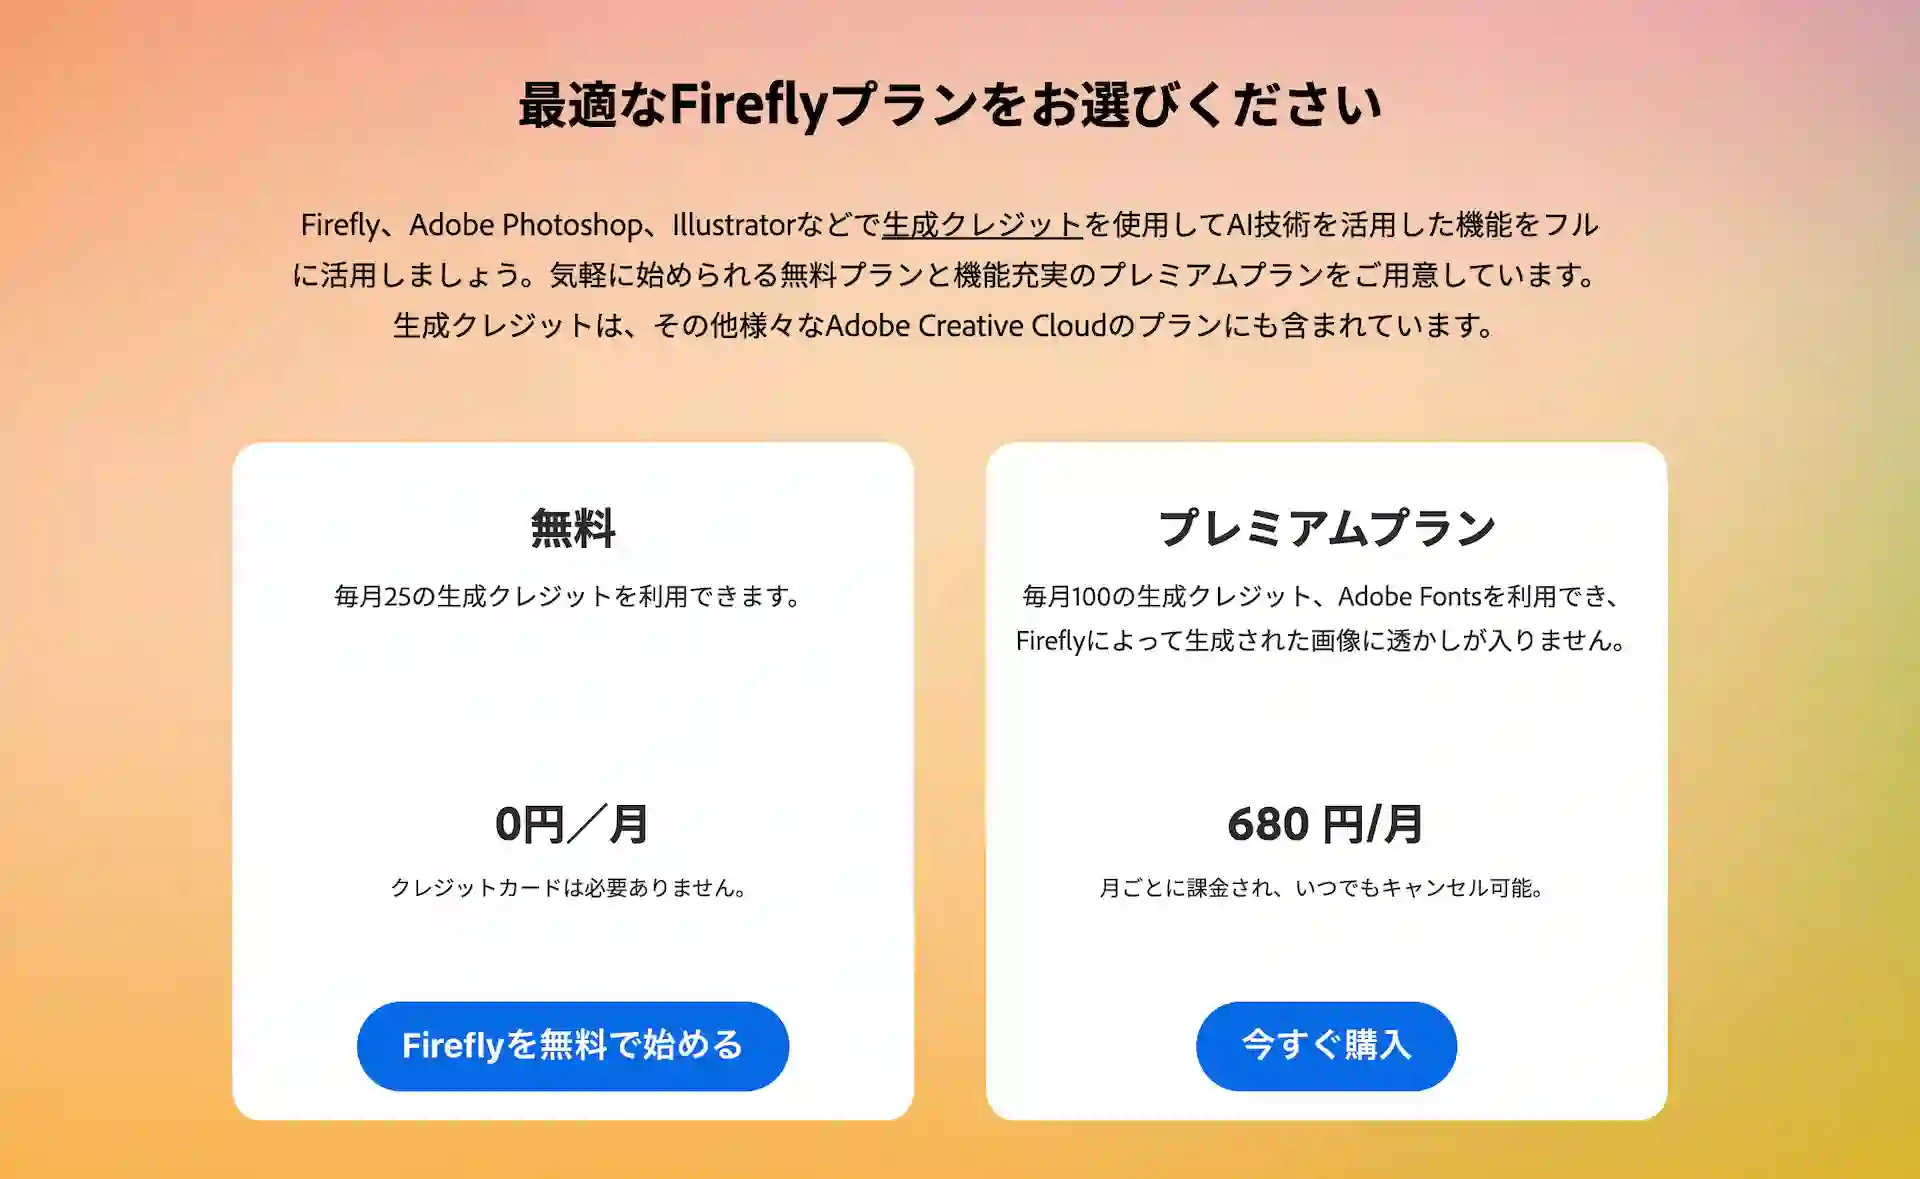 adobe firefly premiumplan pricing